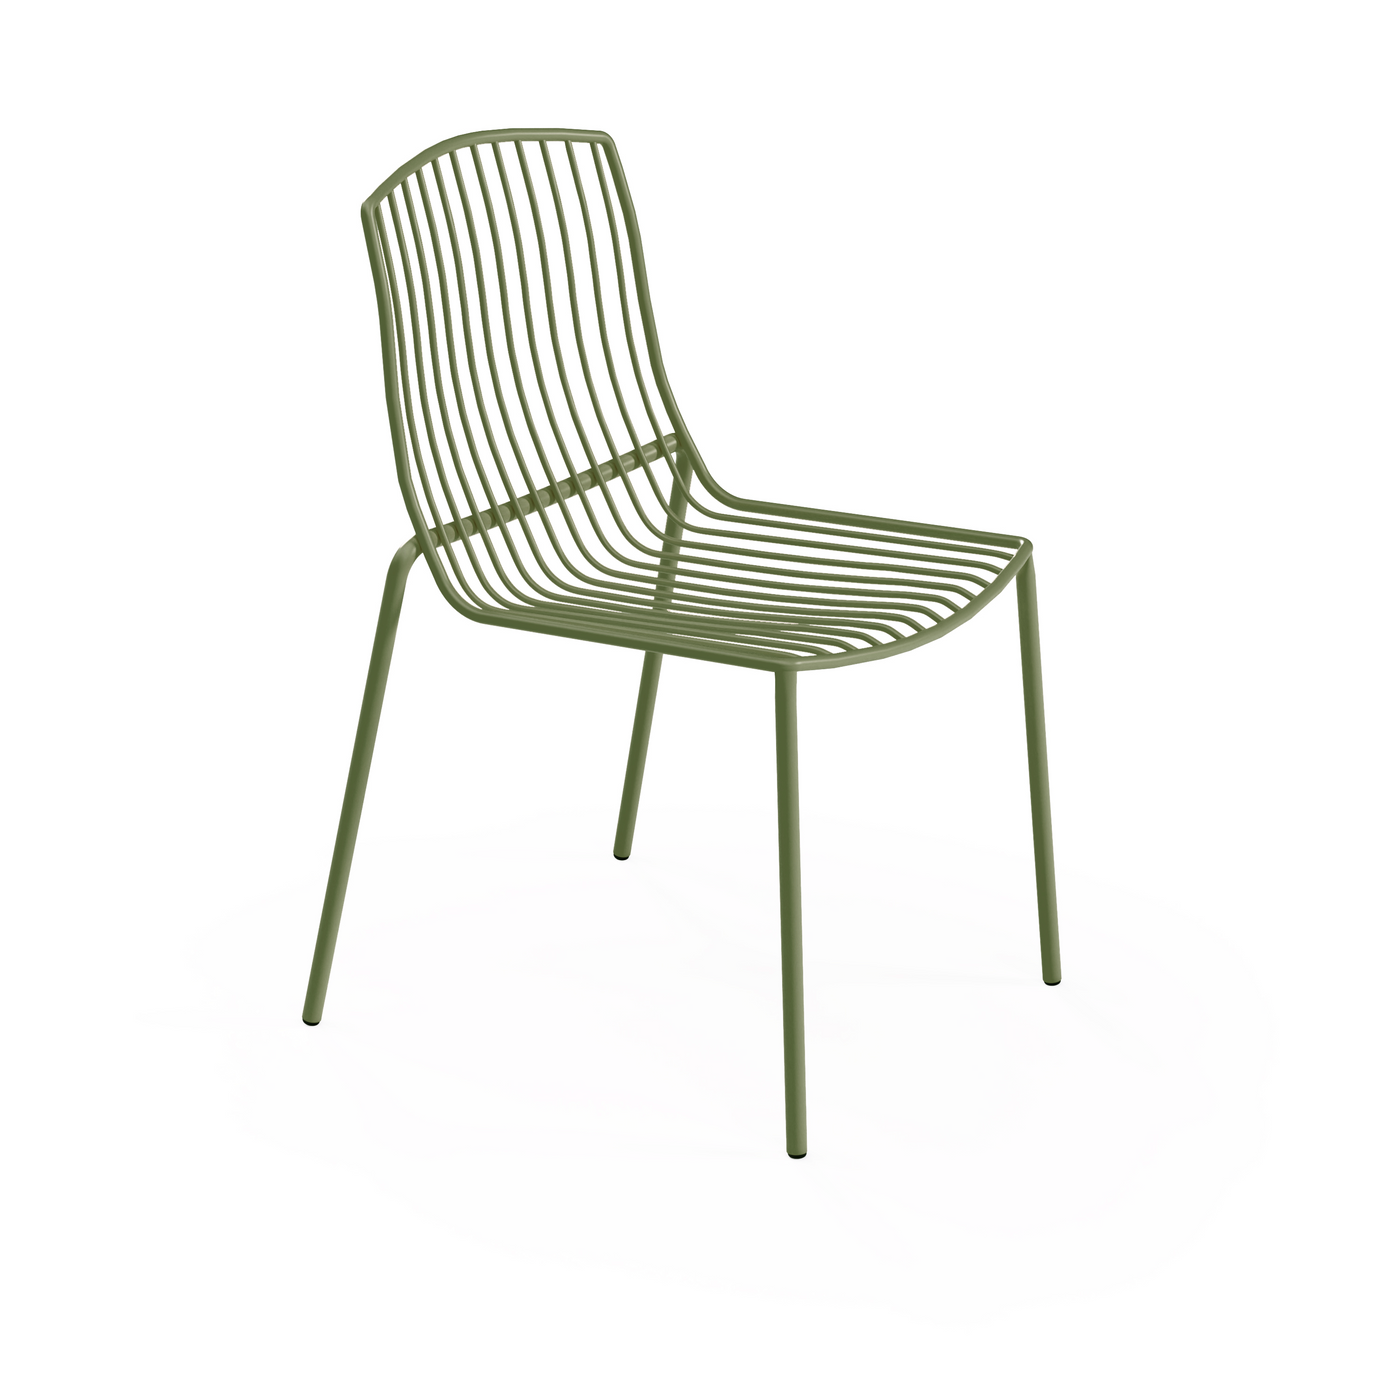 Frame Stackable Metal Garden Chair, Olive Green (Set of 2)